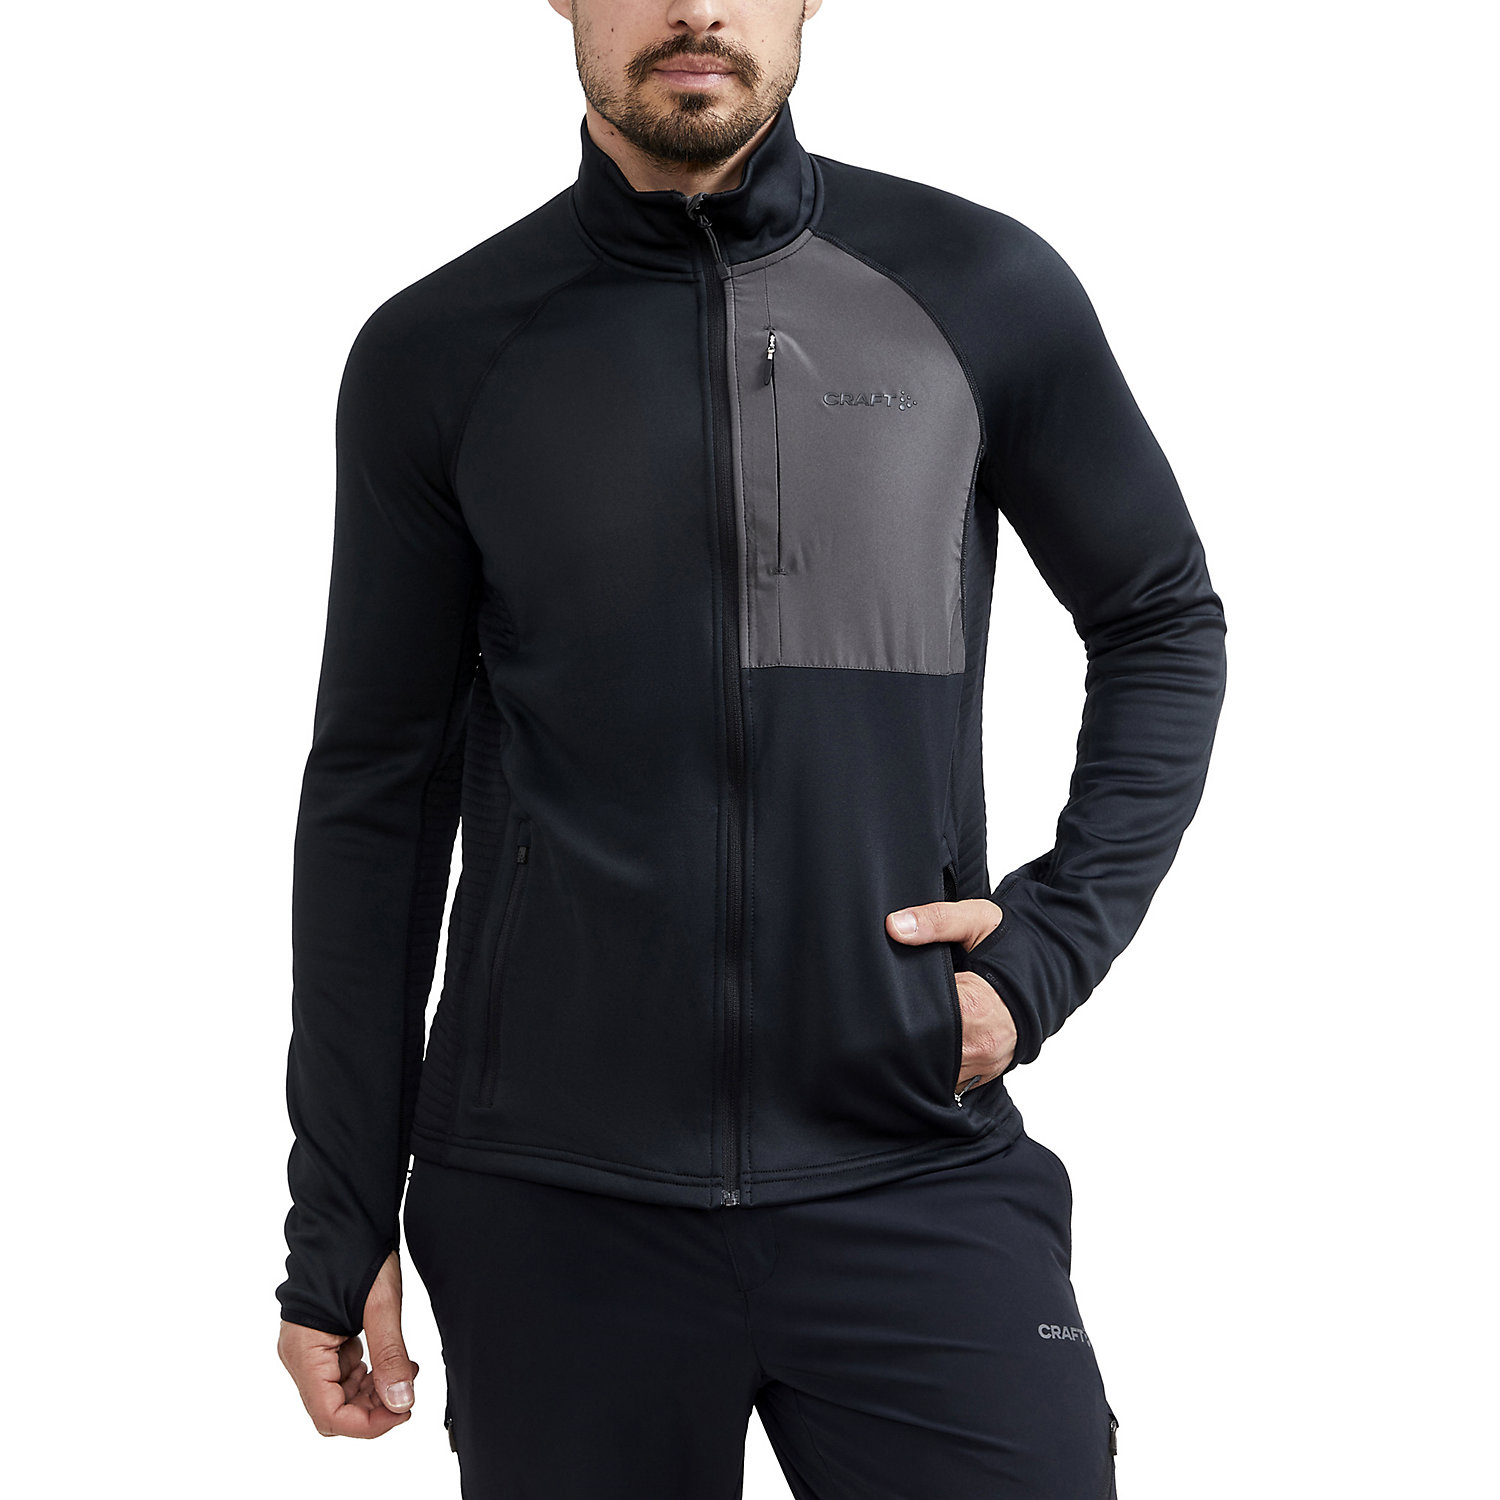 Craft Sportswear Mens Adv Tech Fleece Thermal Midlayer Jacket